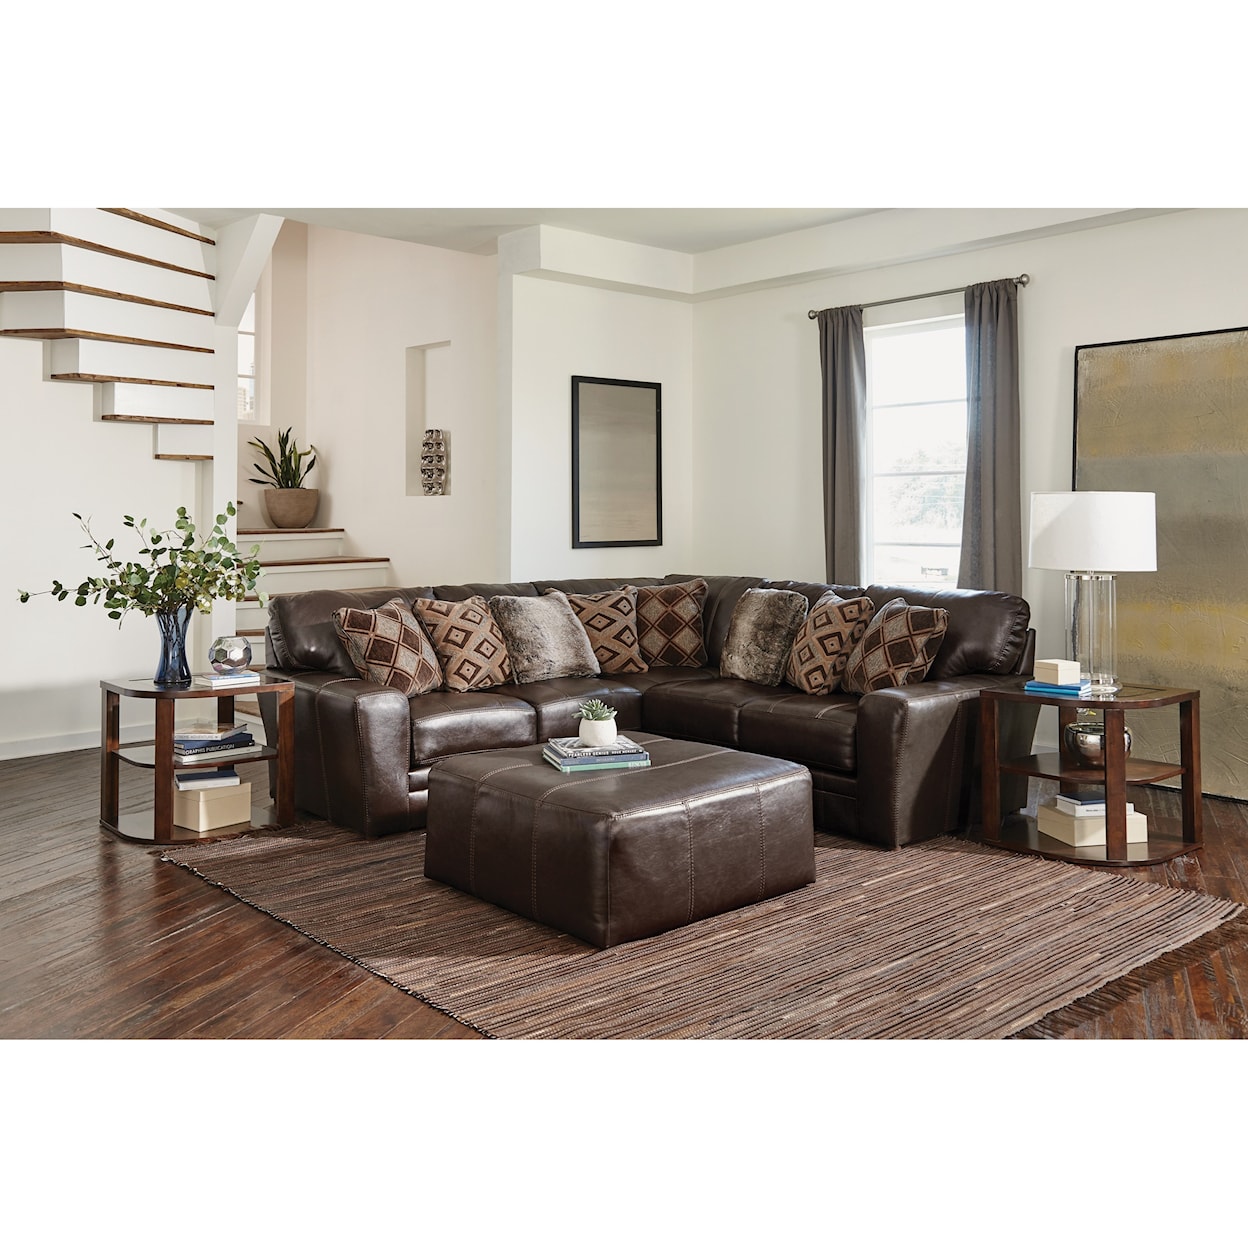 Jackson Furniture 4378 Denali Stationary Living Room Group